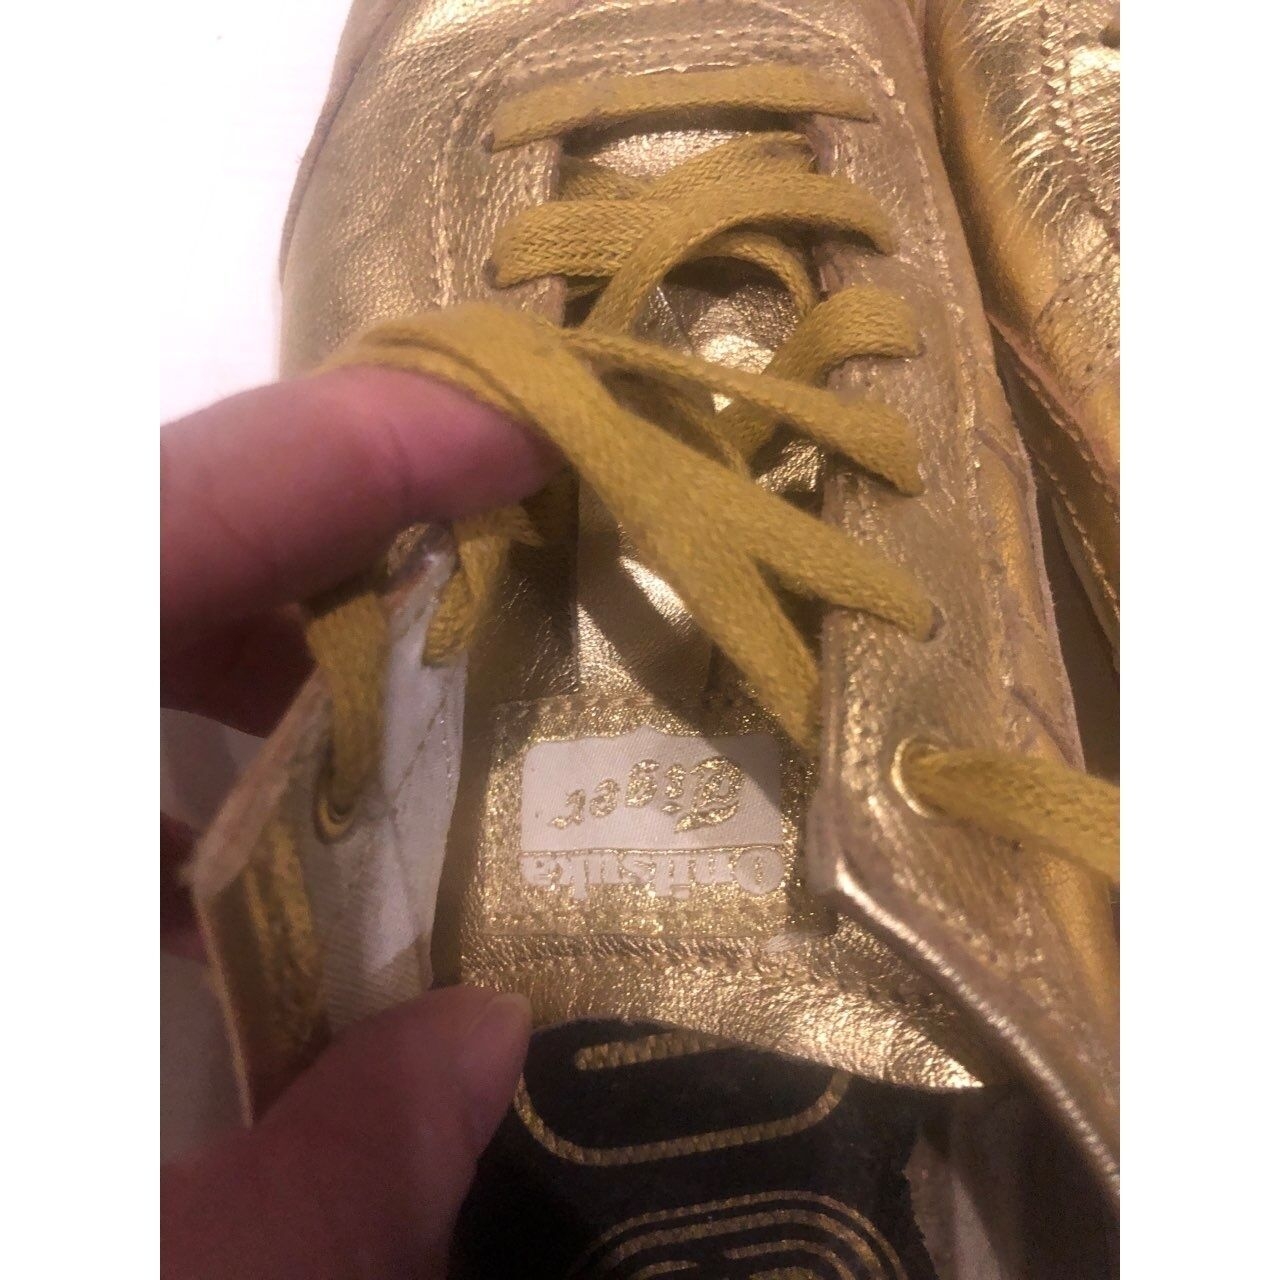 Onitsuka Tiger Gold Sneakers